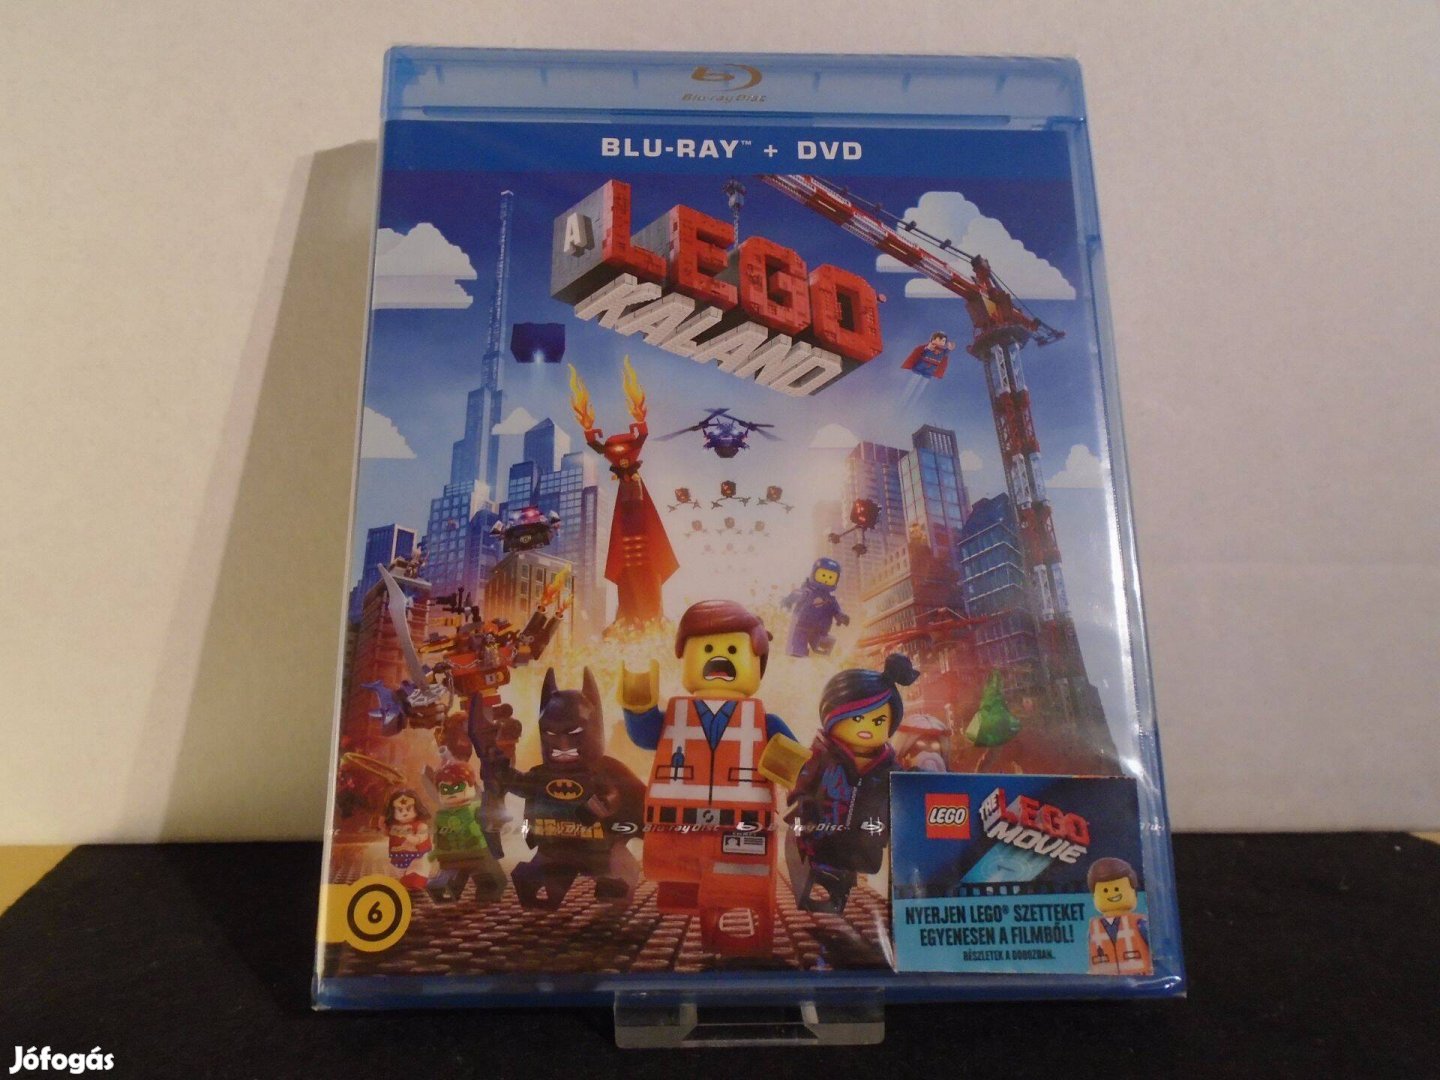 A Lego kaland 2014 Blu-ray / bluray